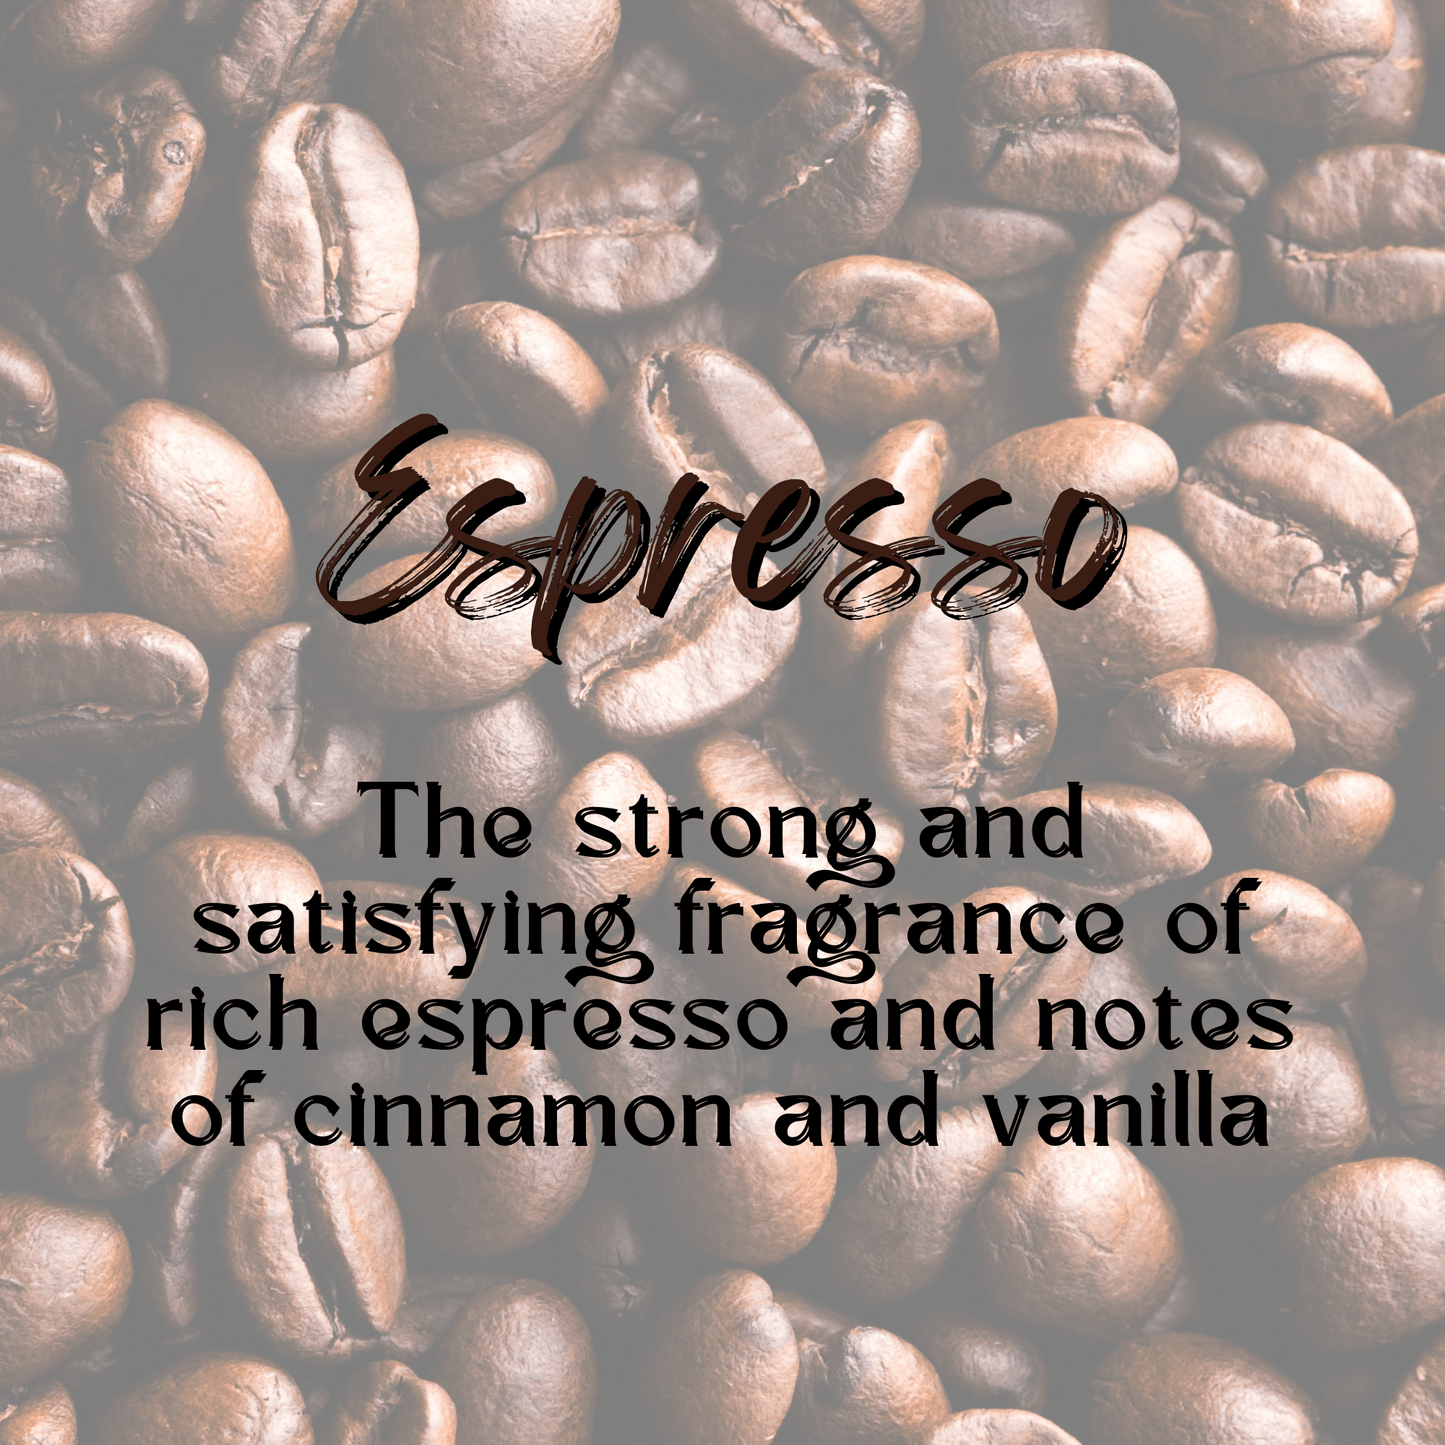 Nourishing Body Oil | Espresso | Choice of Size